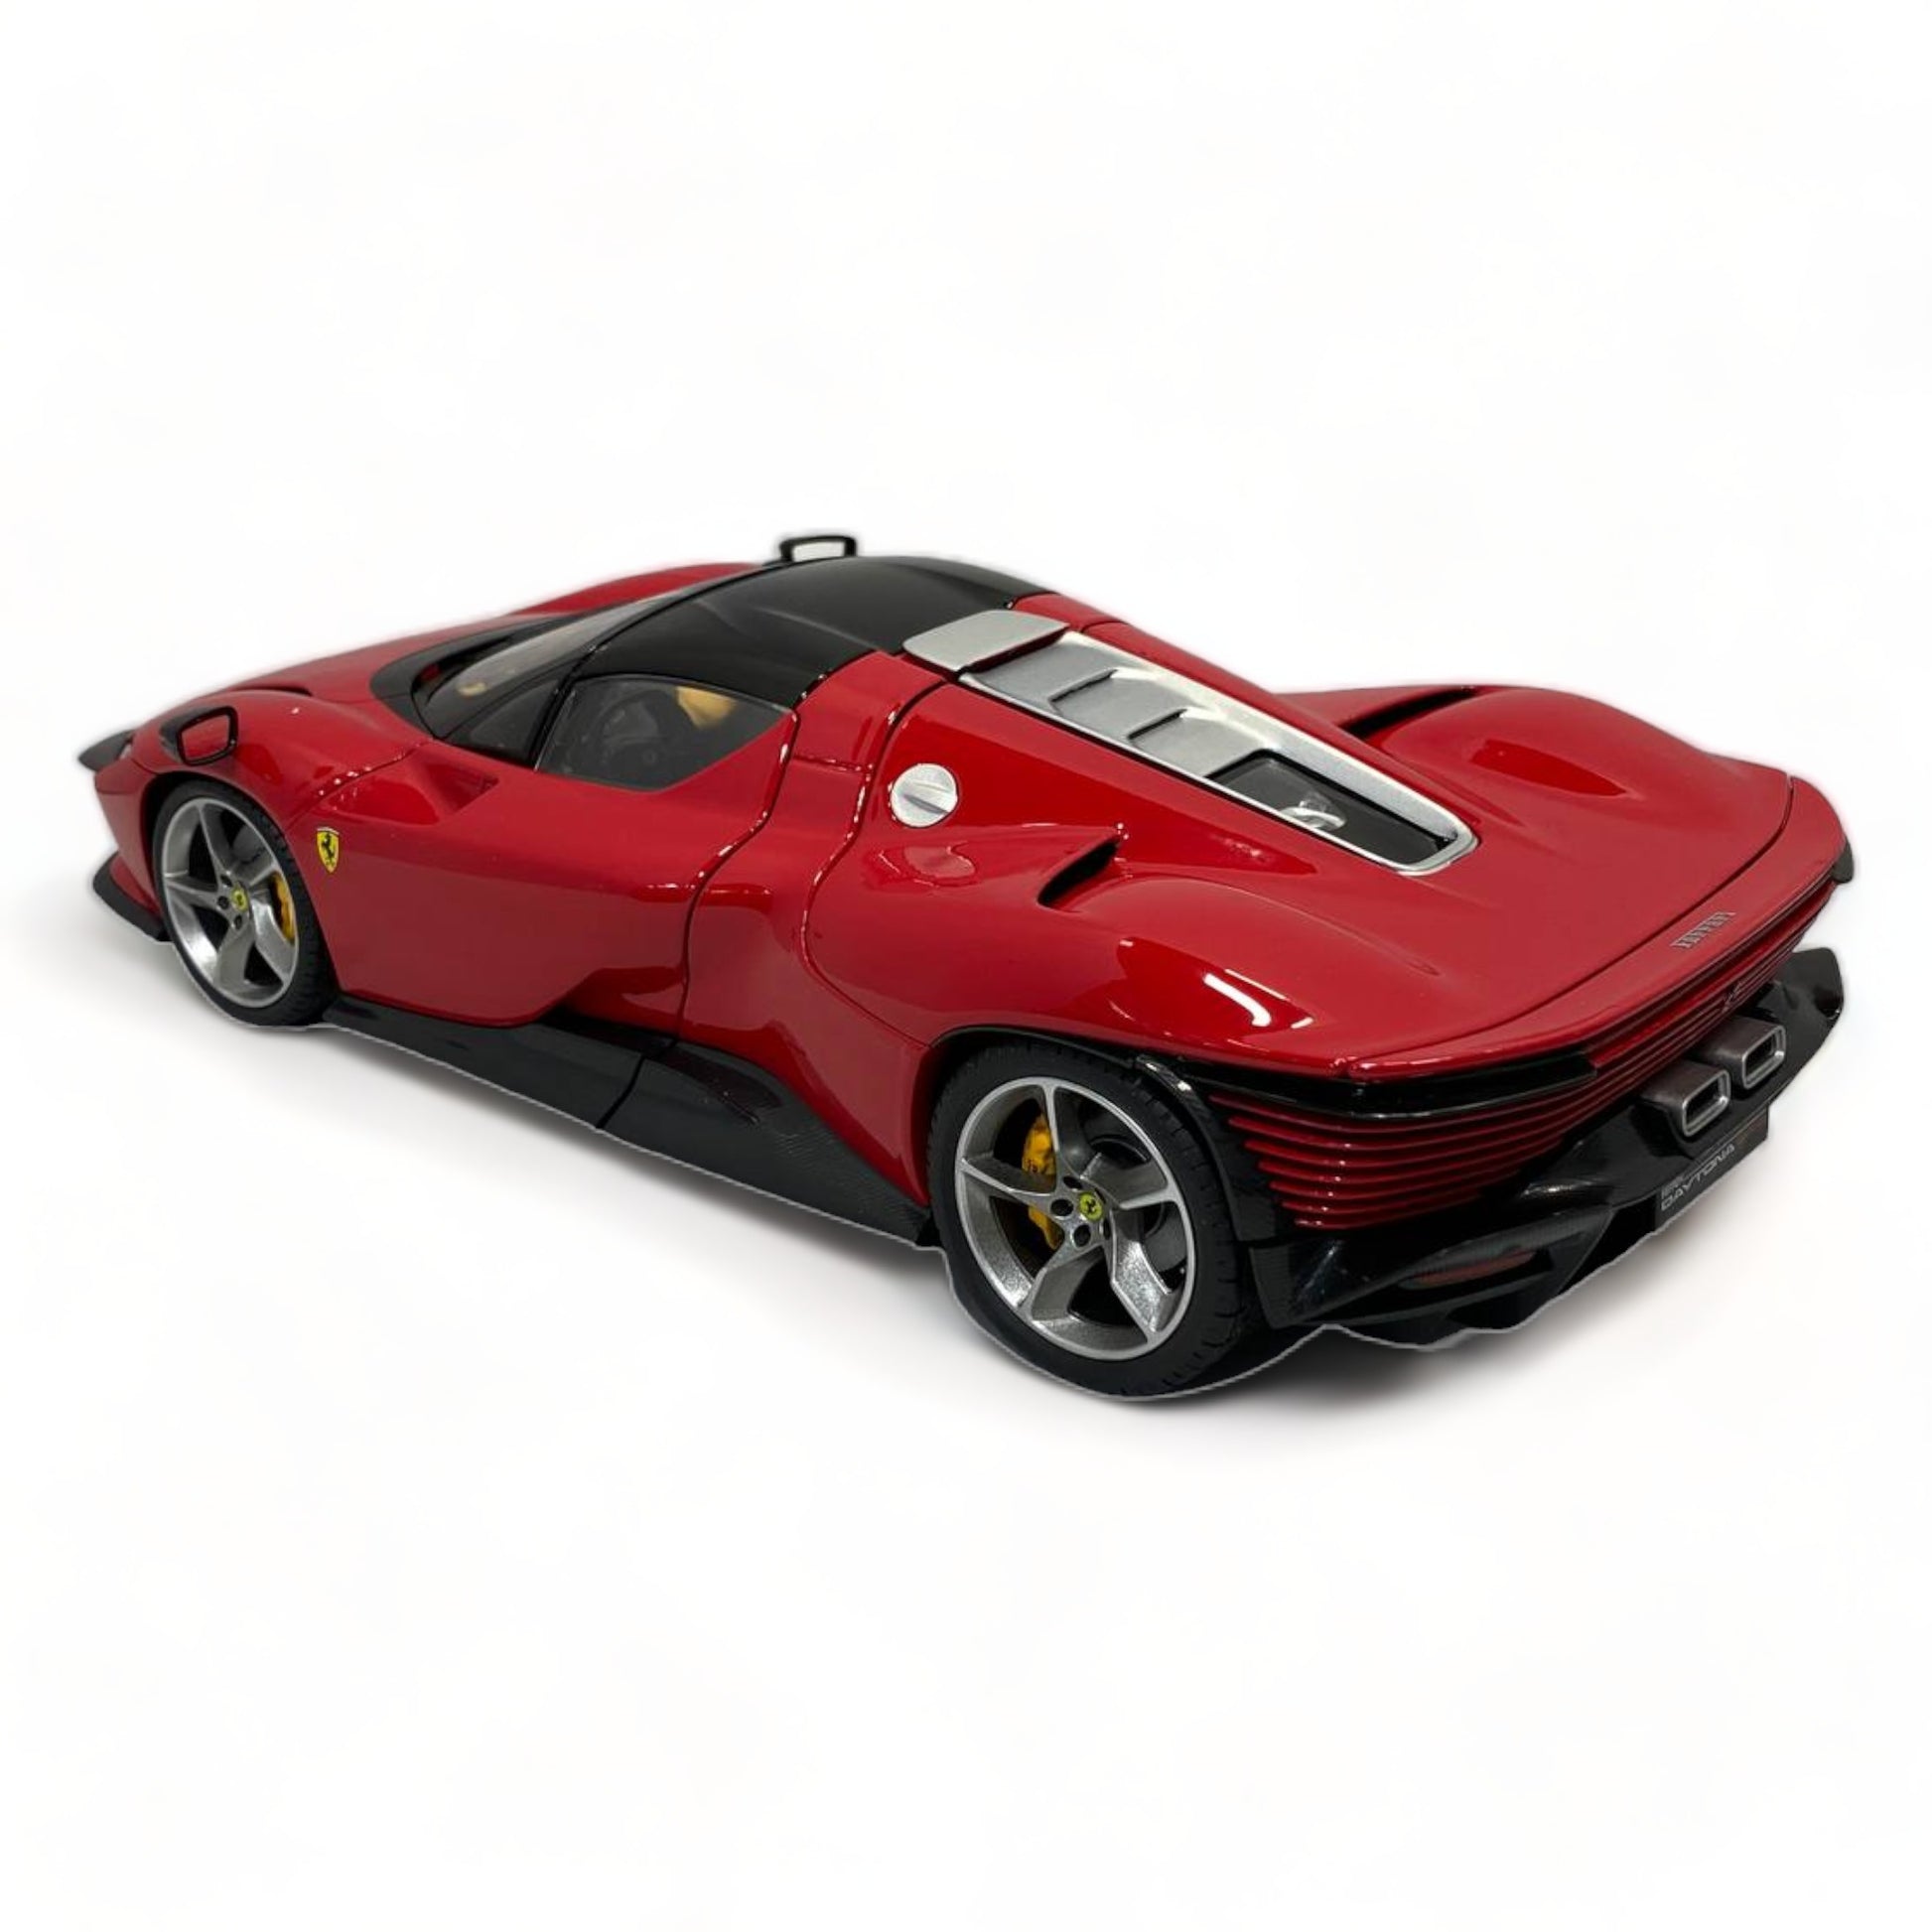 Bburago Ferrari Daytona SP3 - 1/18 Diecast Metal Full Opening, Striking Red|Sold in Dturman.com Dubai UAE.